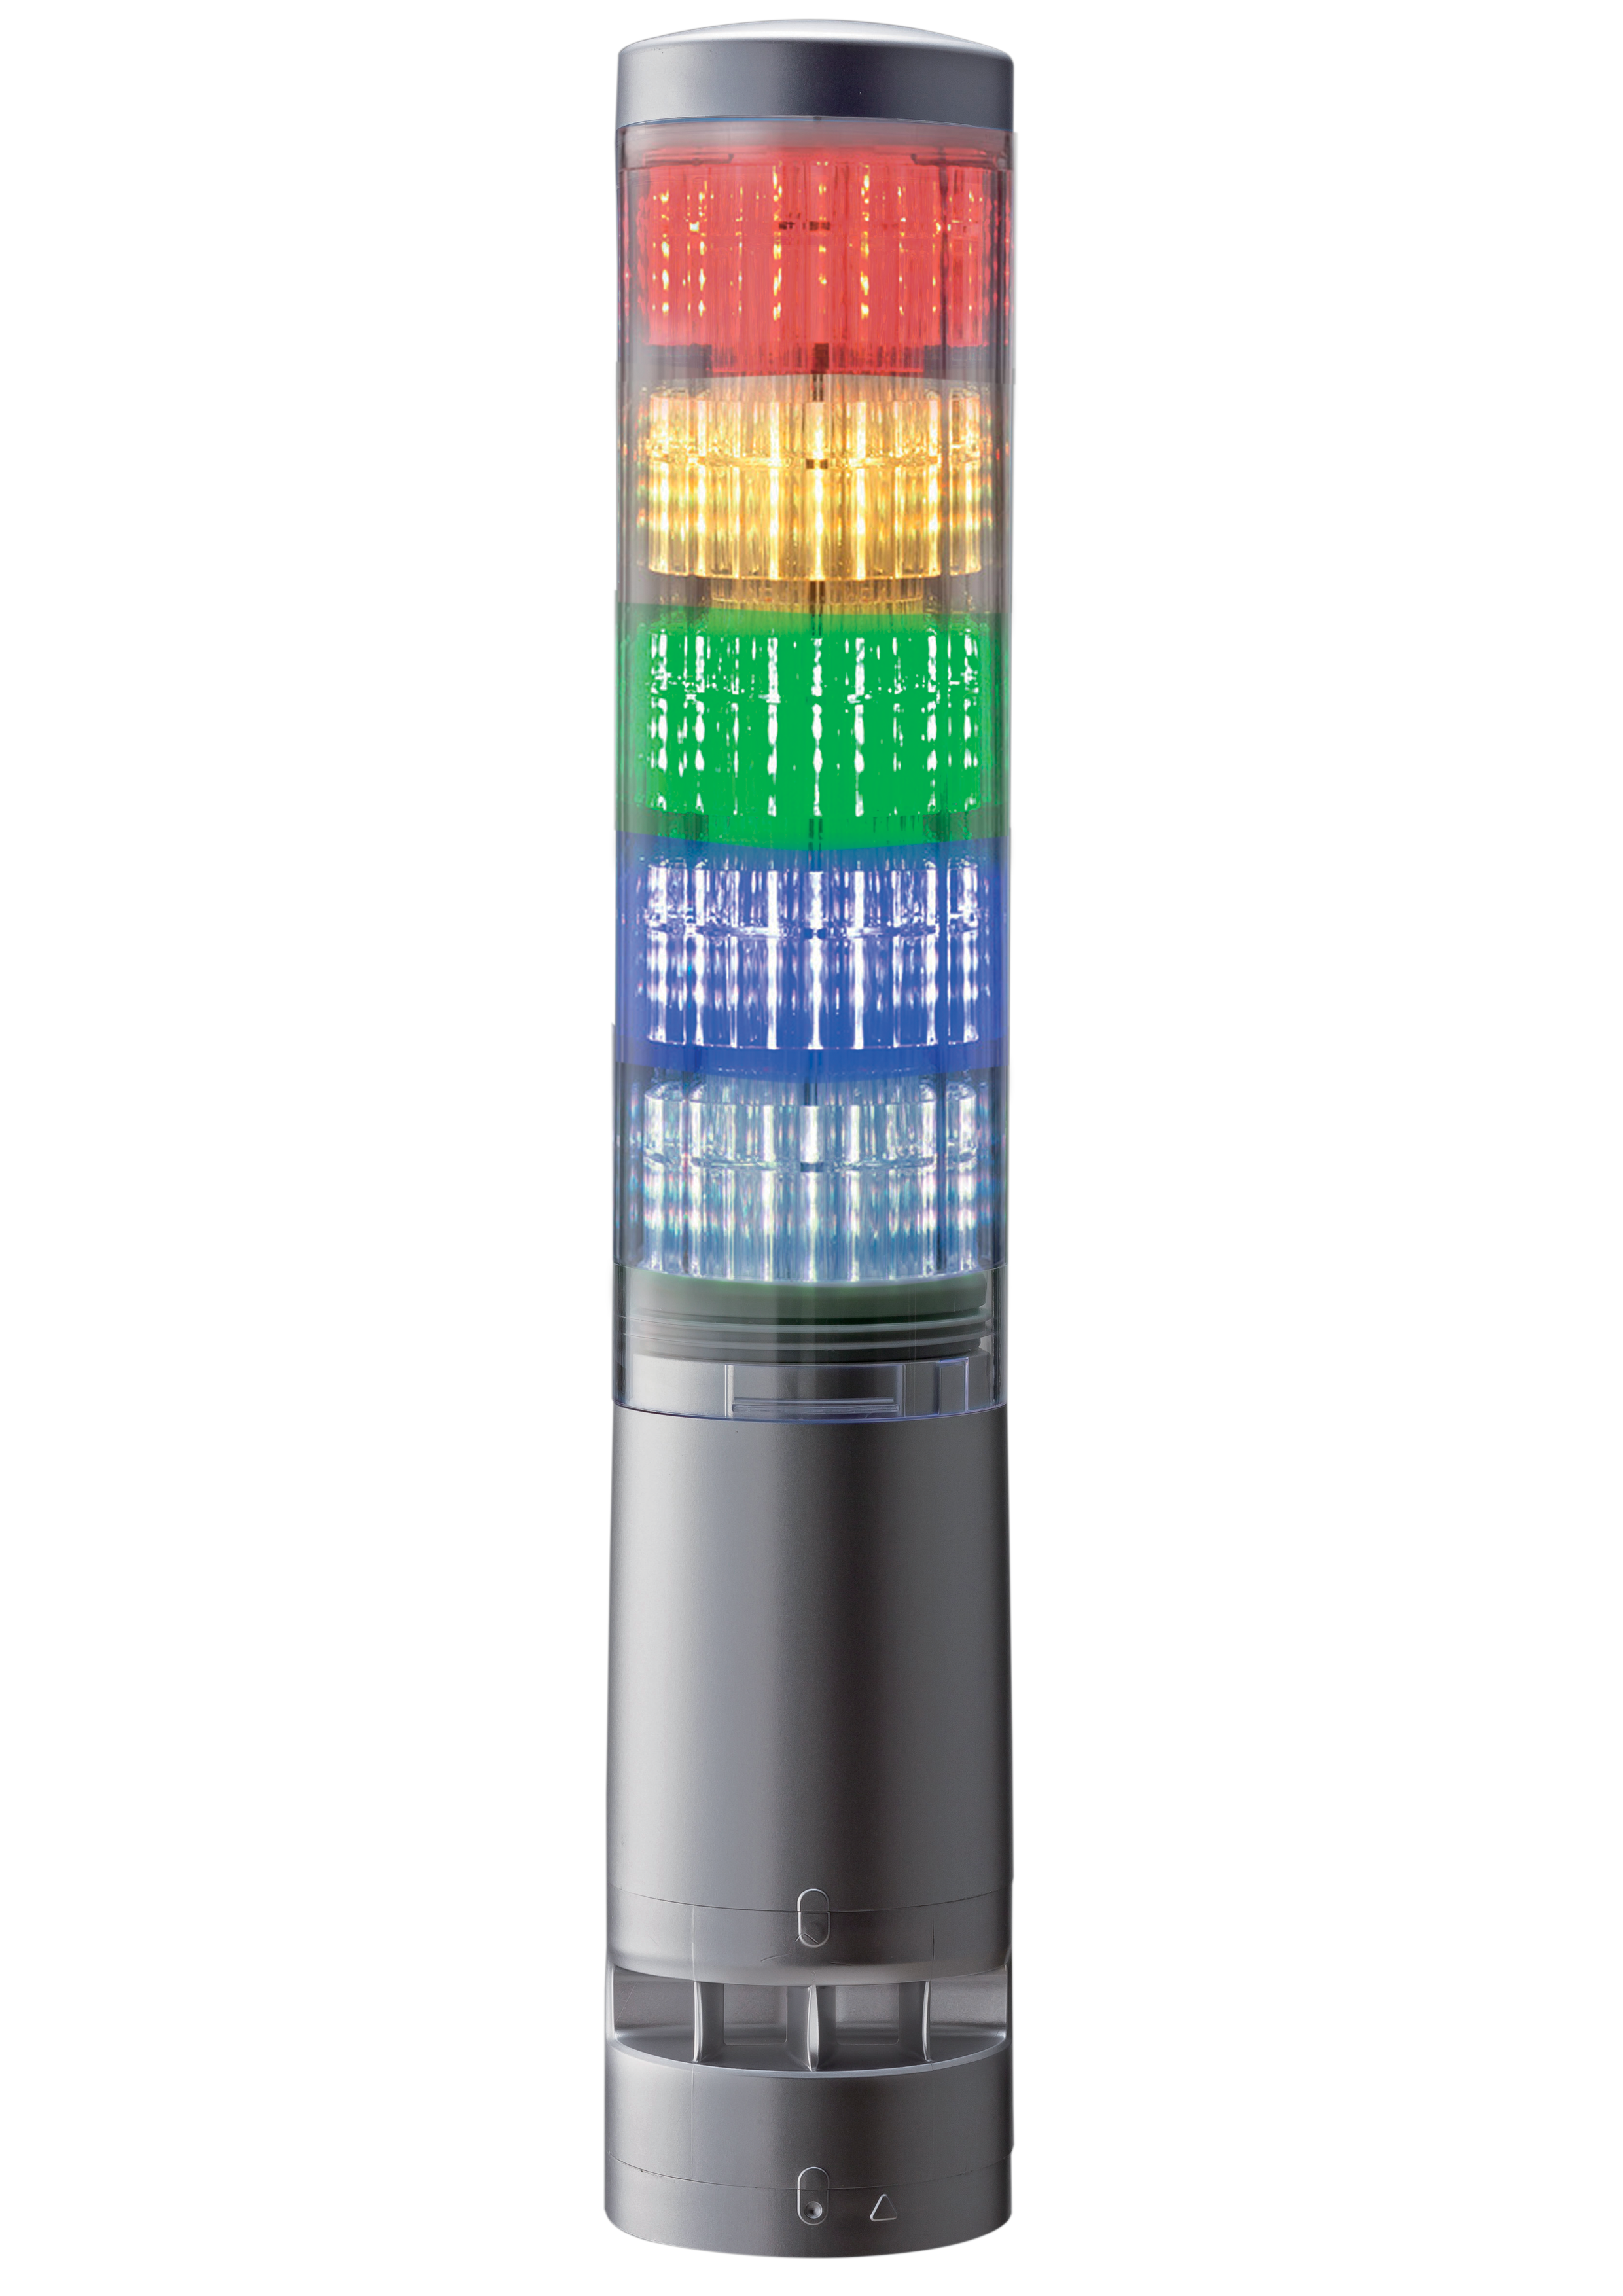 Torretta di segnalazione Patlite, 24 V c.c., LED RGB, 5 elementi, lenti Trasparente, con Cicalino